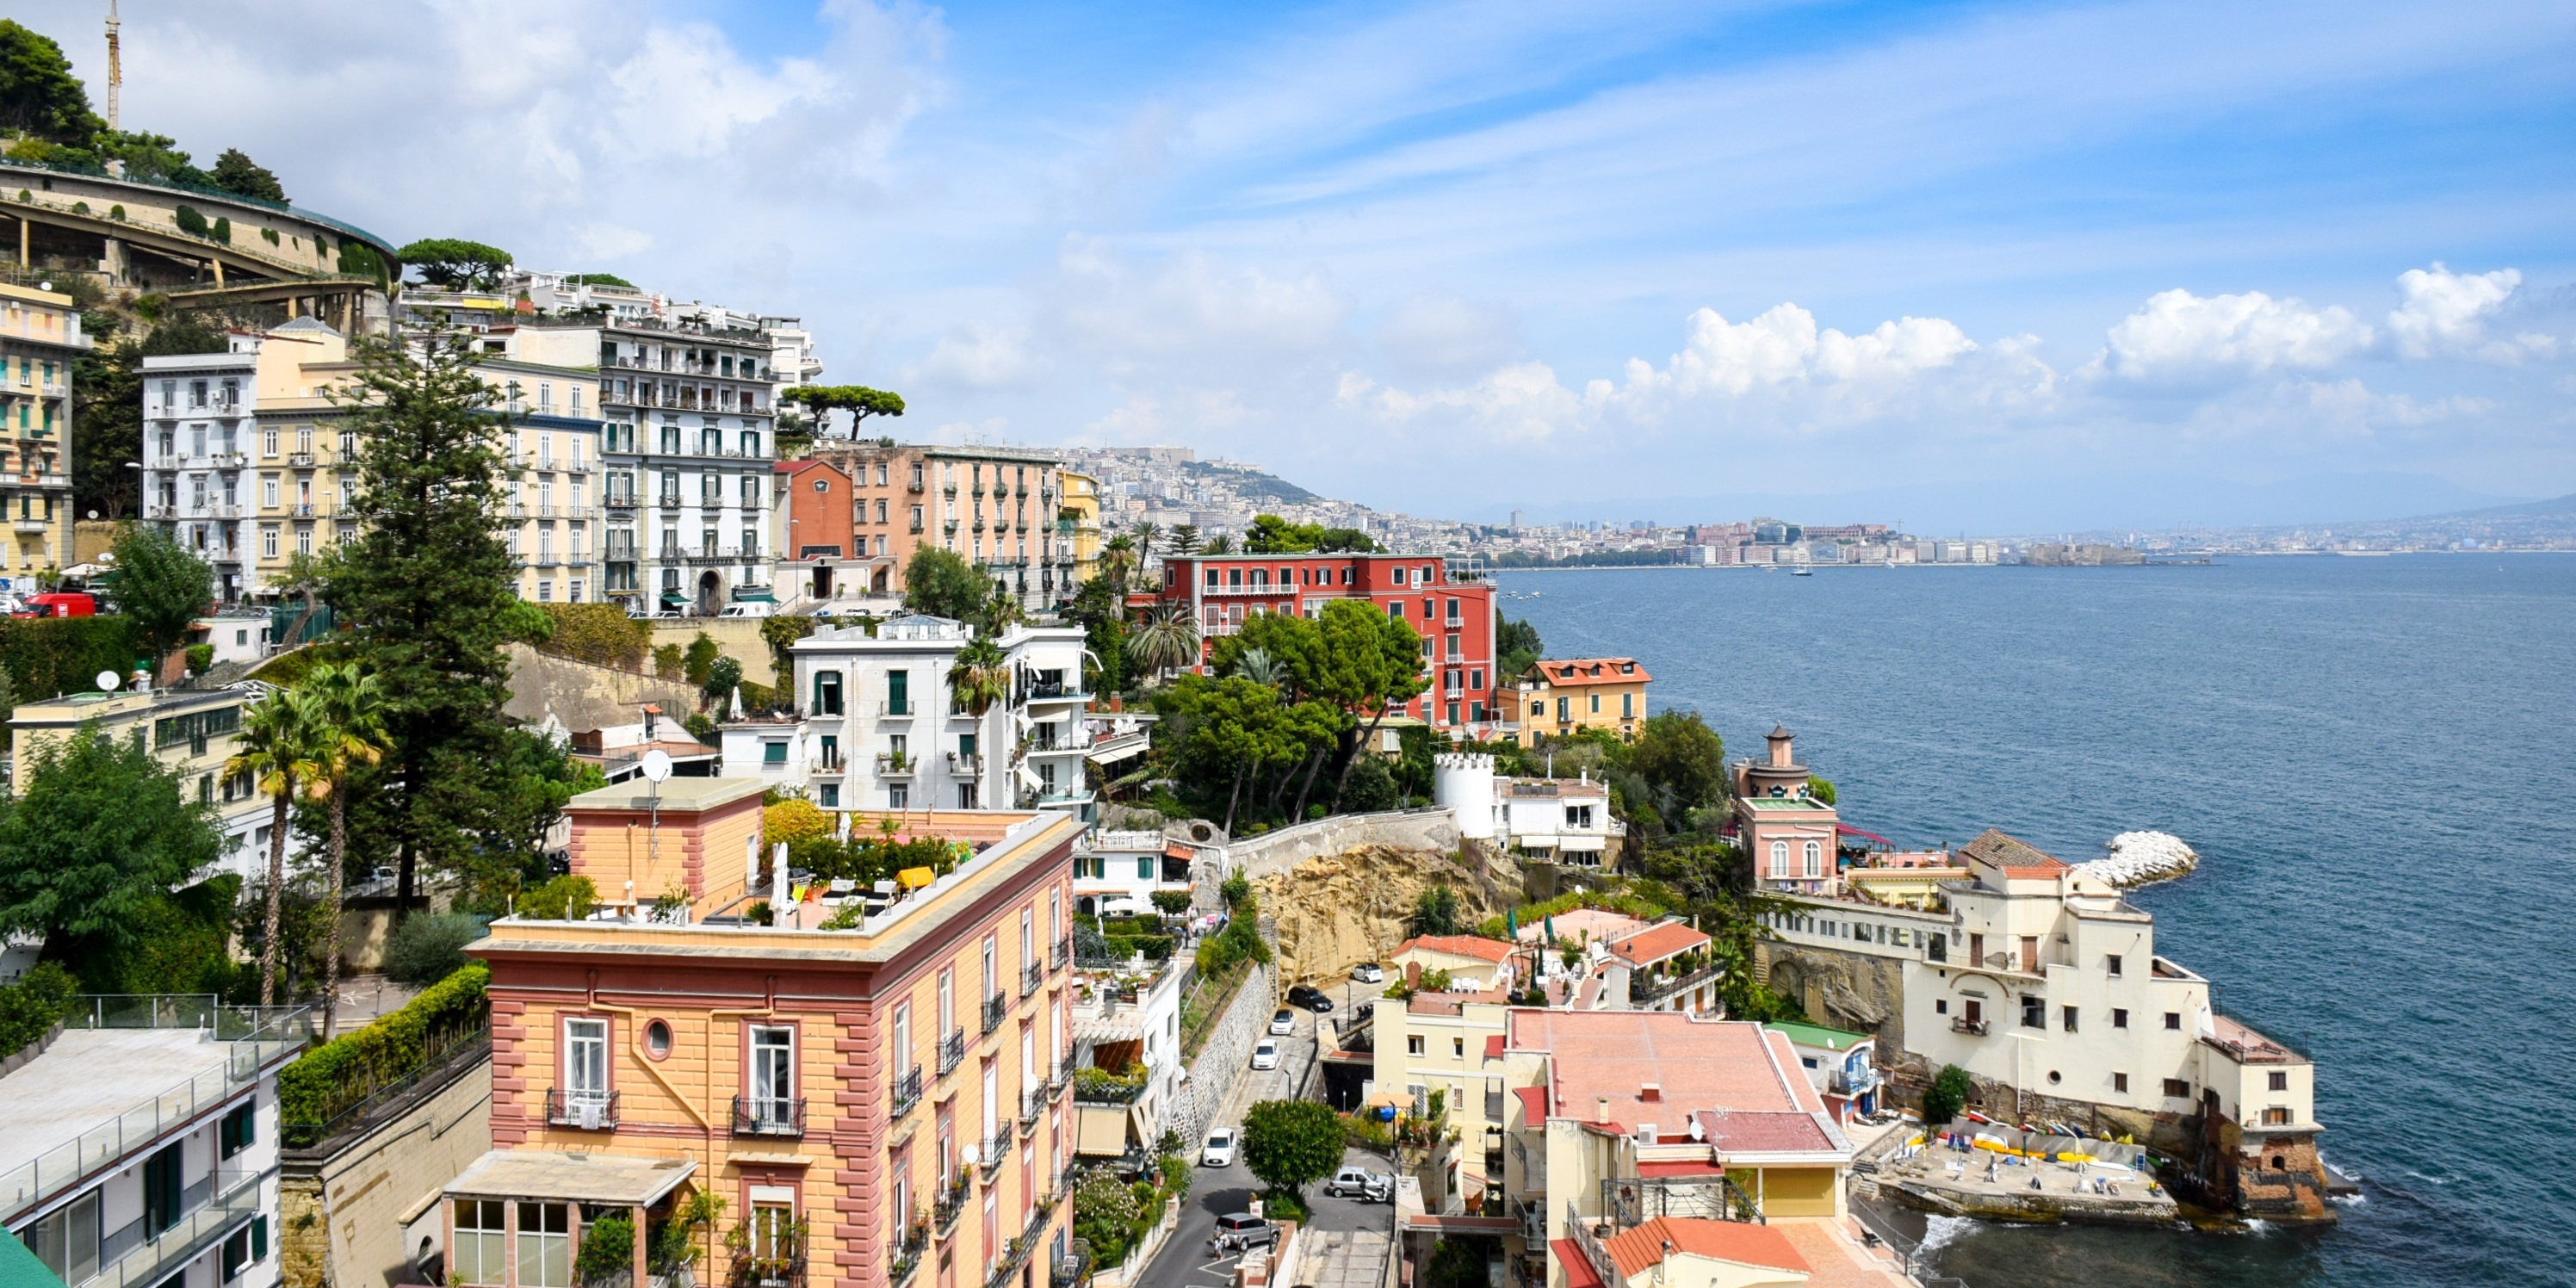 Naples, Italy. Photo by Lajos Móricz from Pixabay.